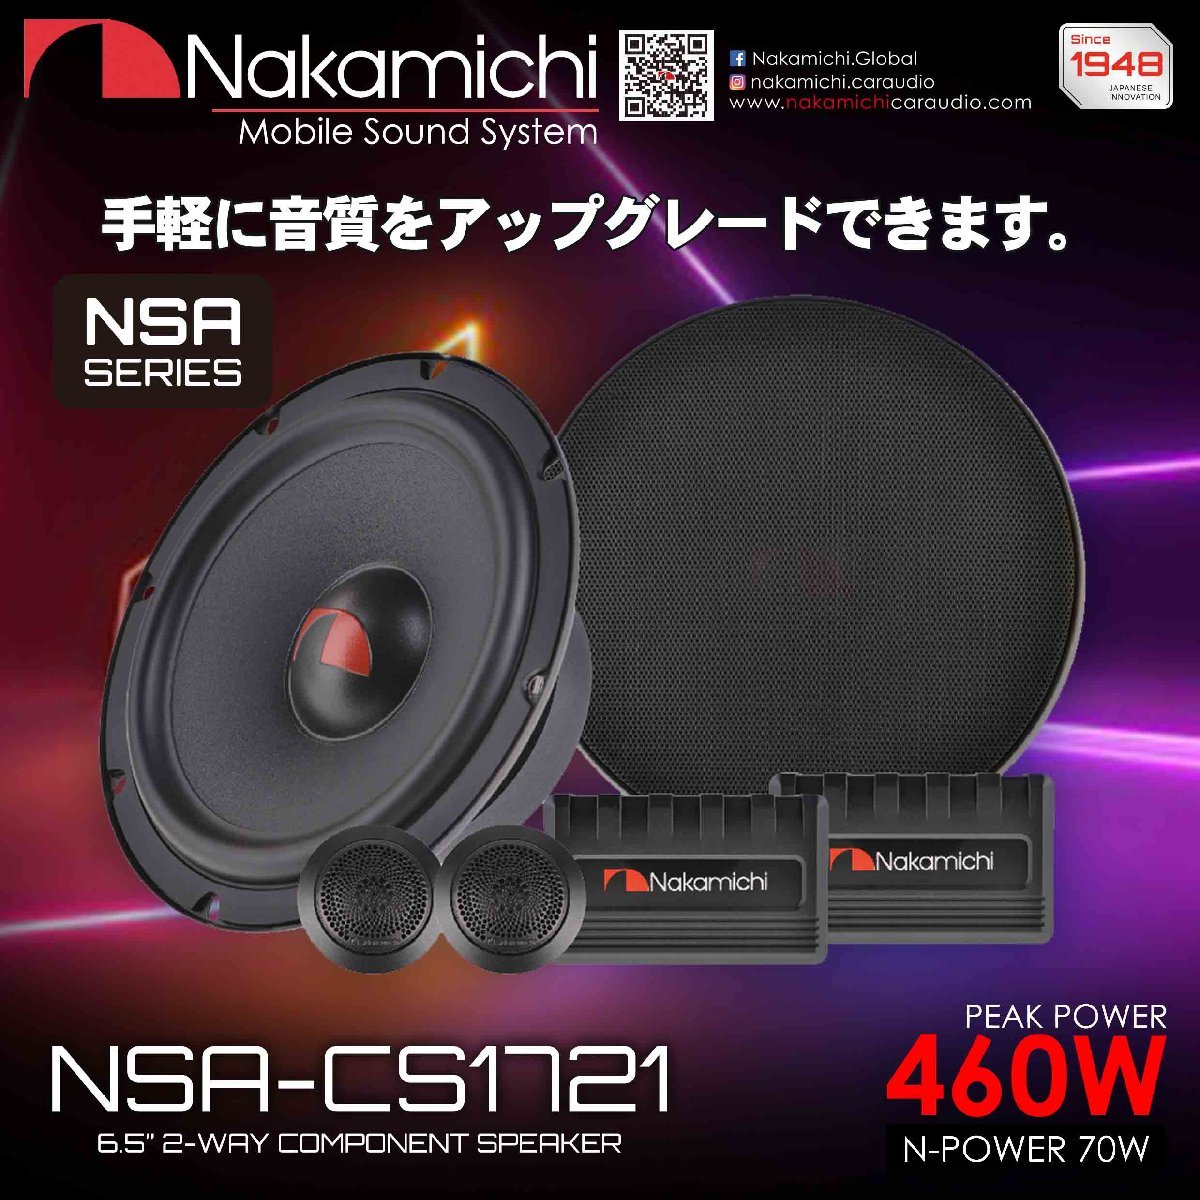 #USA Audio# "Накамити" Nakamichi NSA серии NSA-CS1721 16.5cm Max.460W* с гарантией * включая налог 